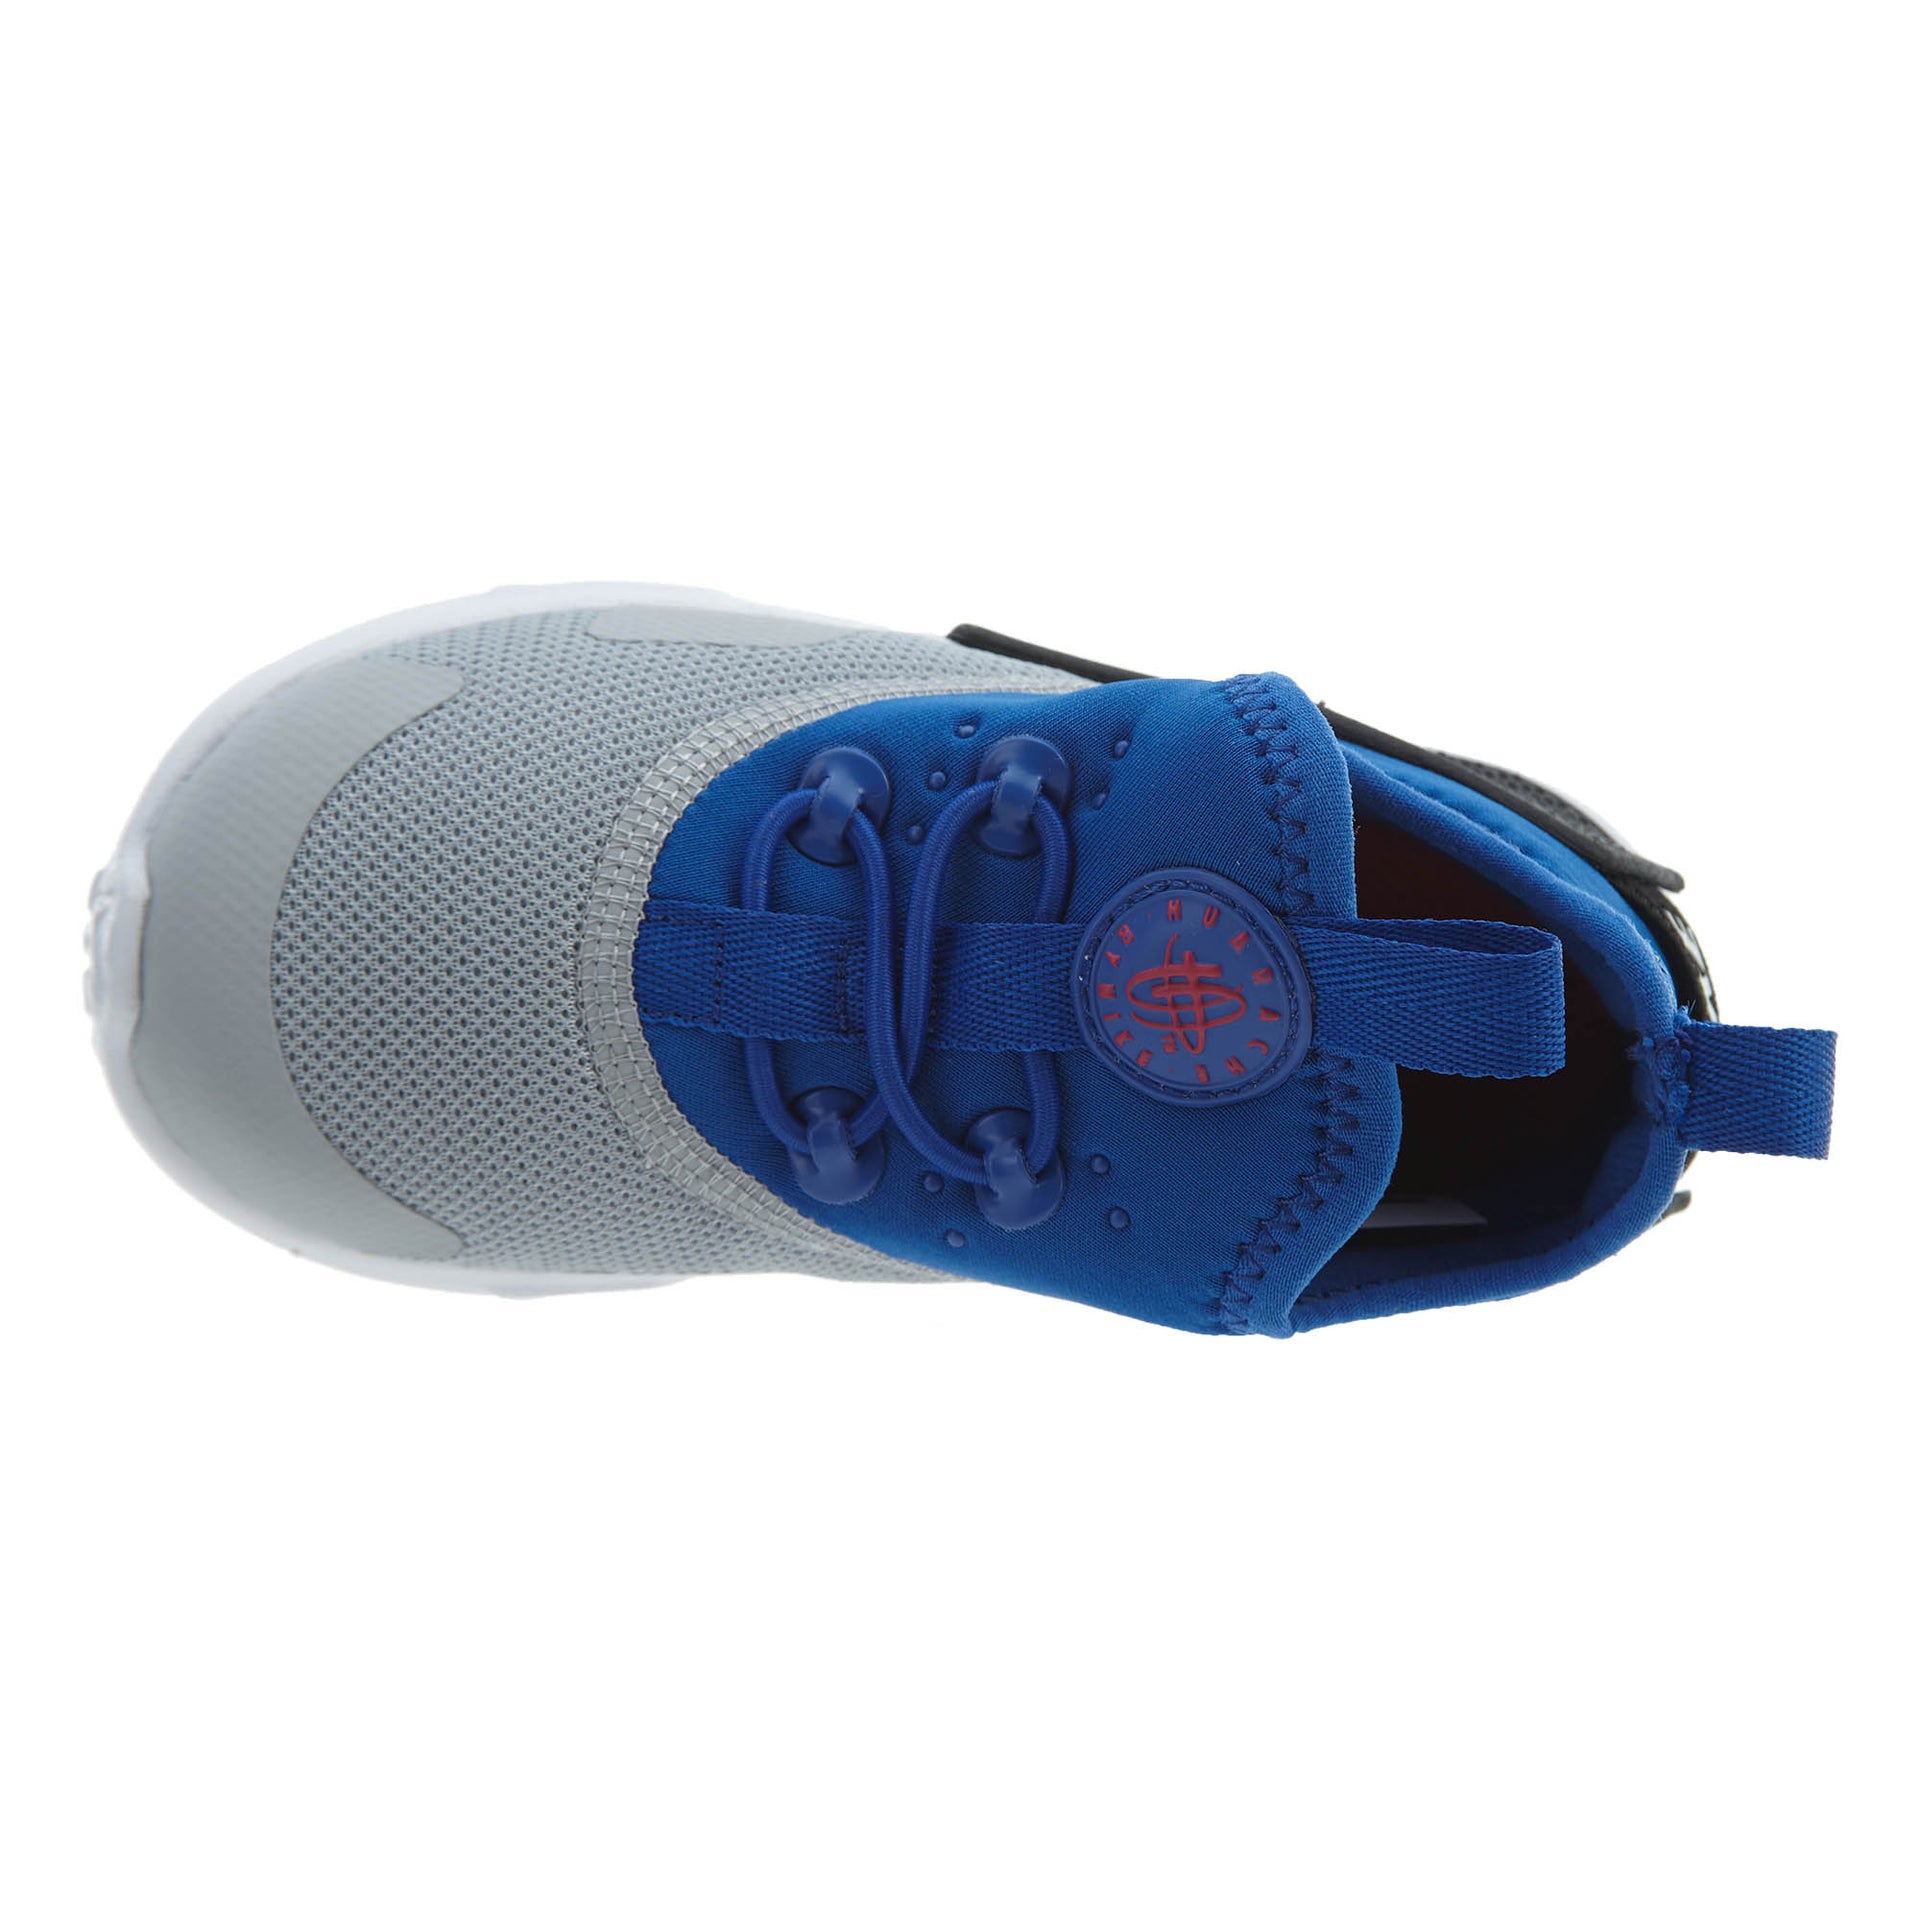 Nike Huarache Drift Toddlers Style : Aa3504